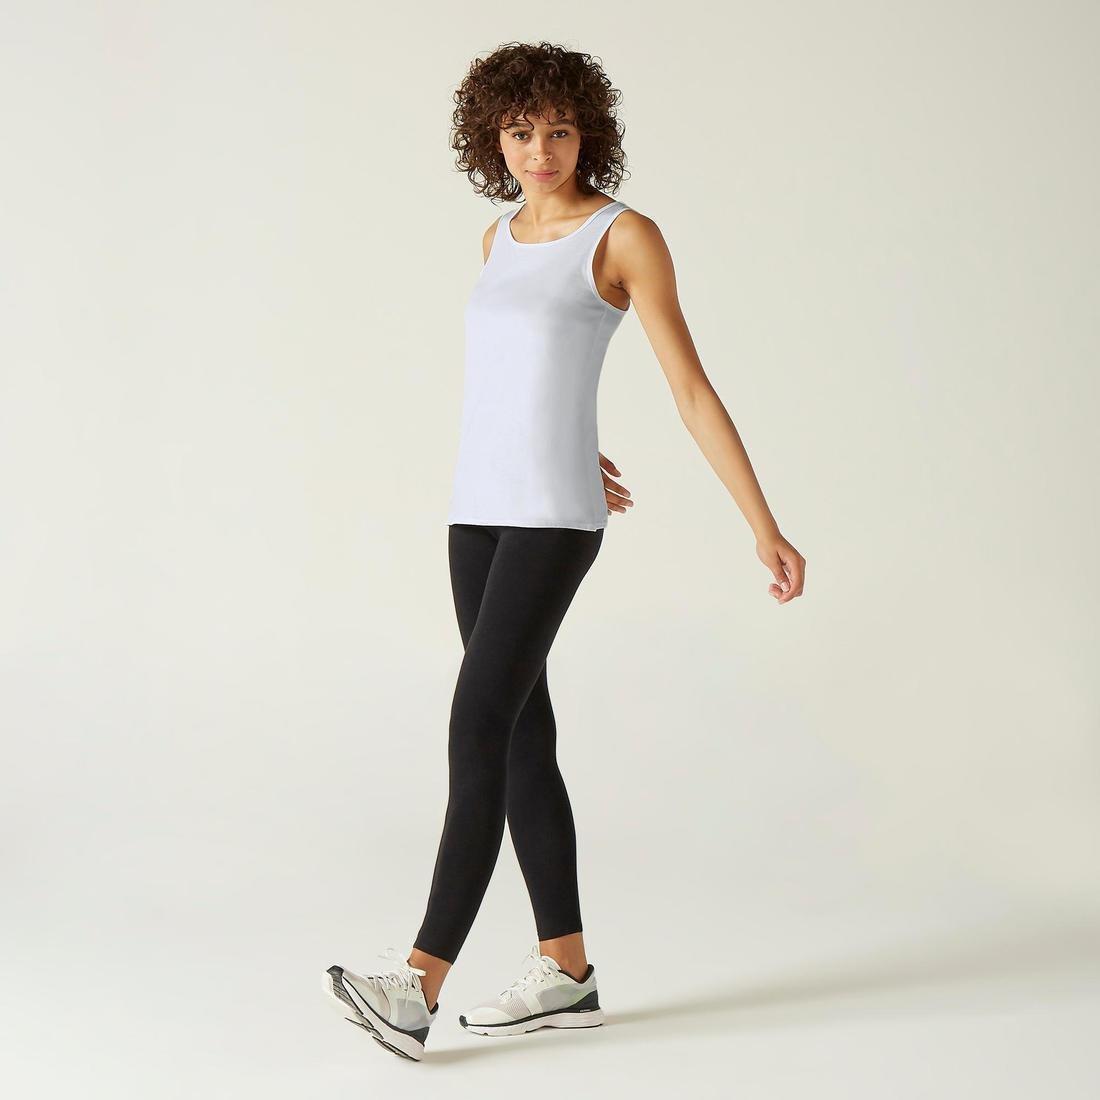 DOMYOS - Essential Women's Fitness Tank Top-White